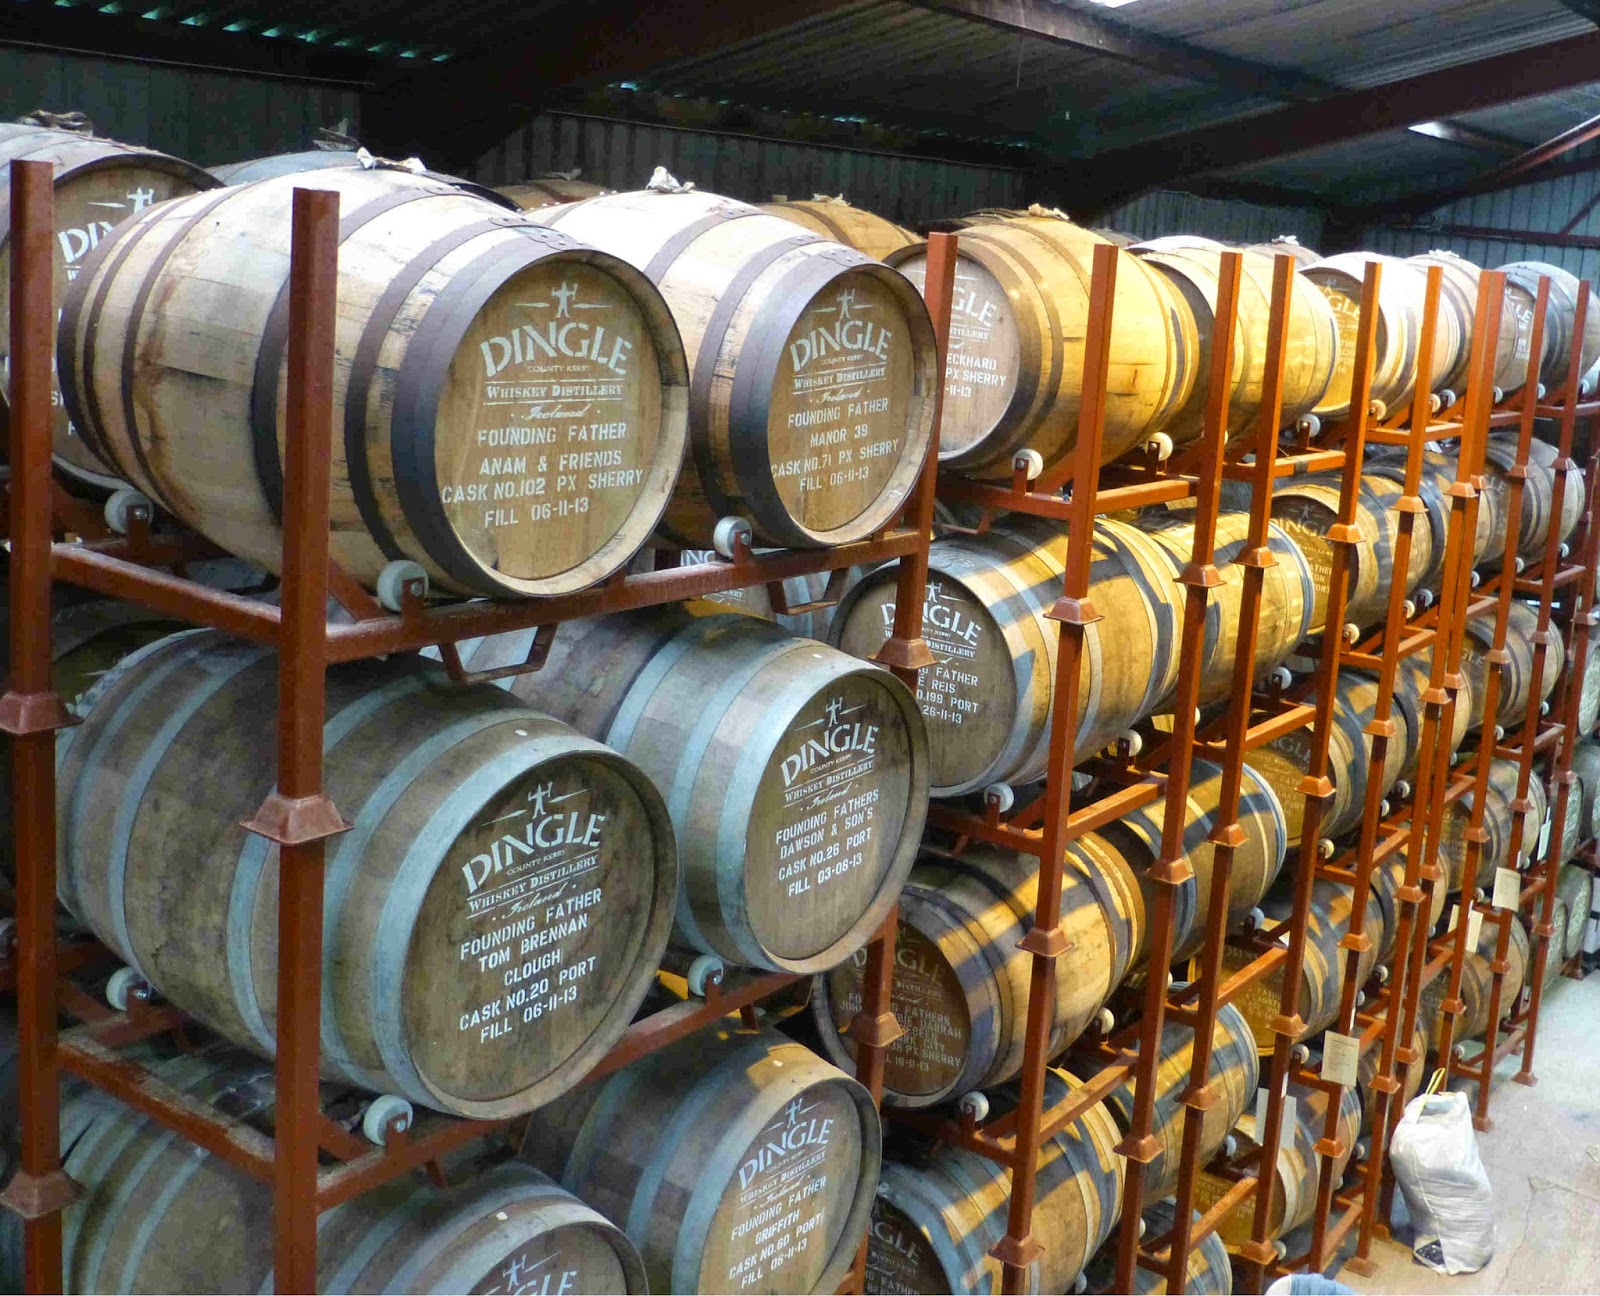 dingle whiskey distillery tour